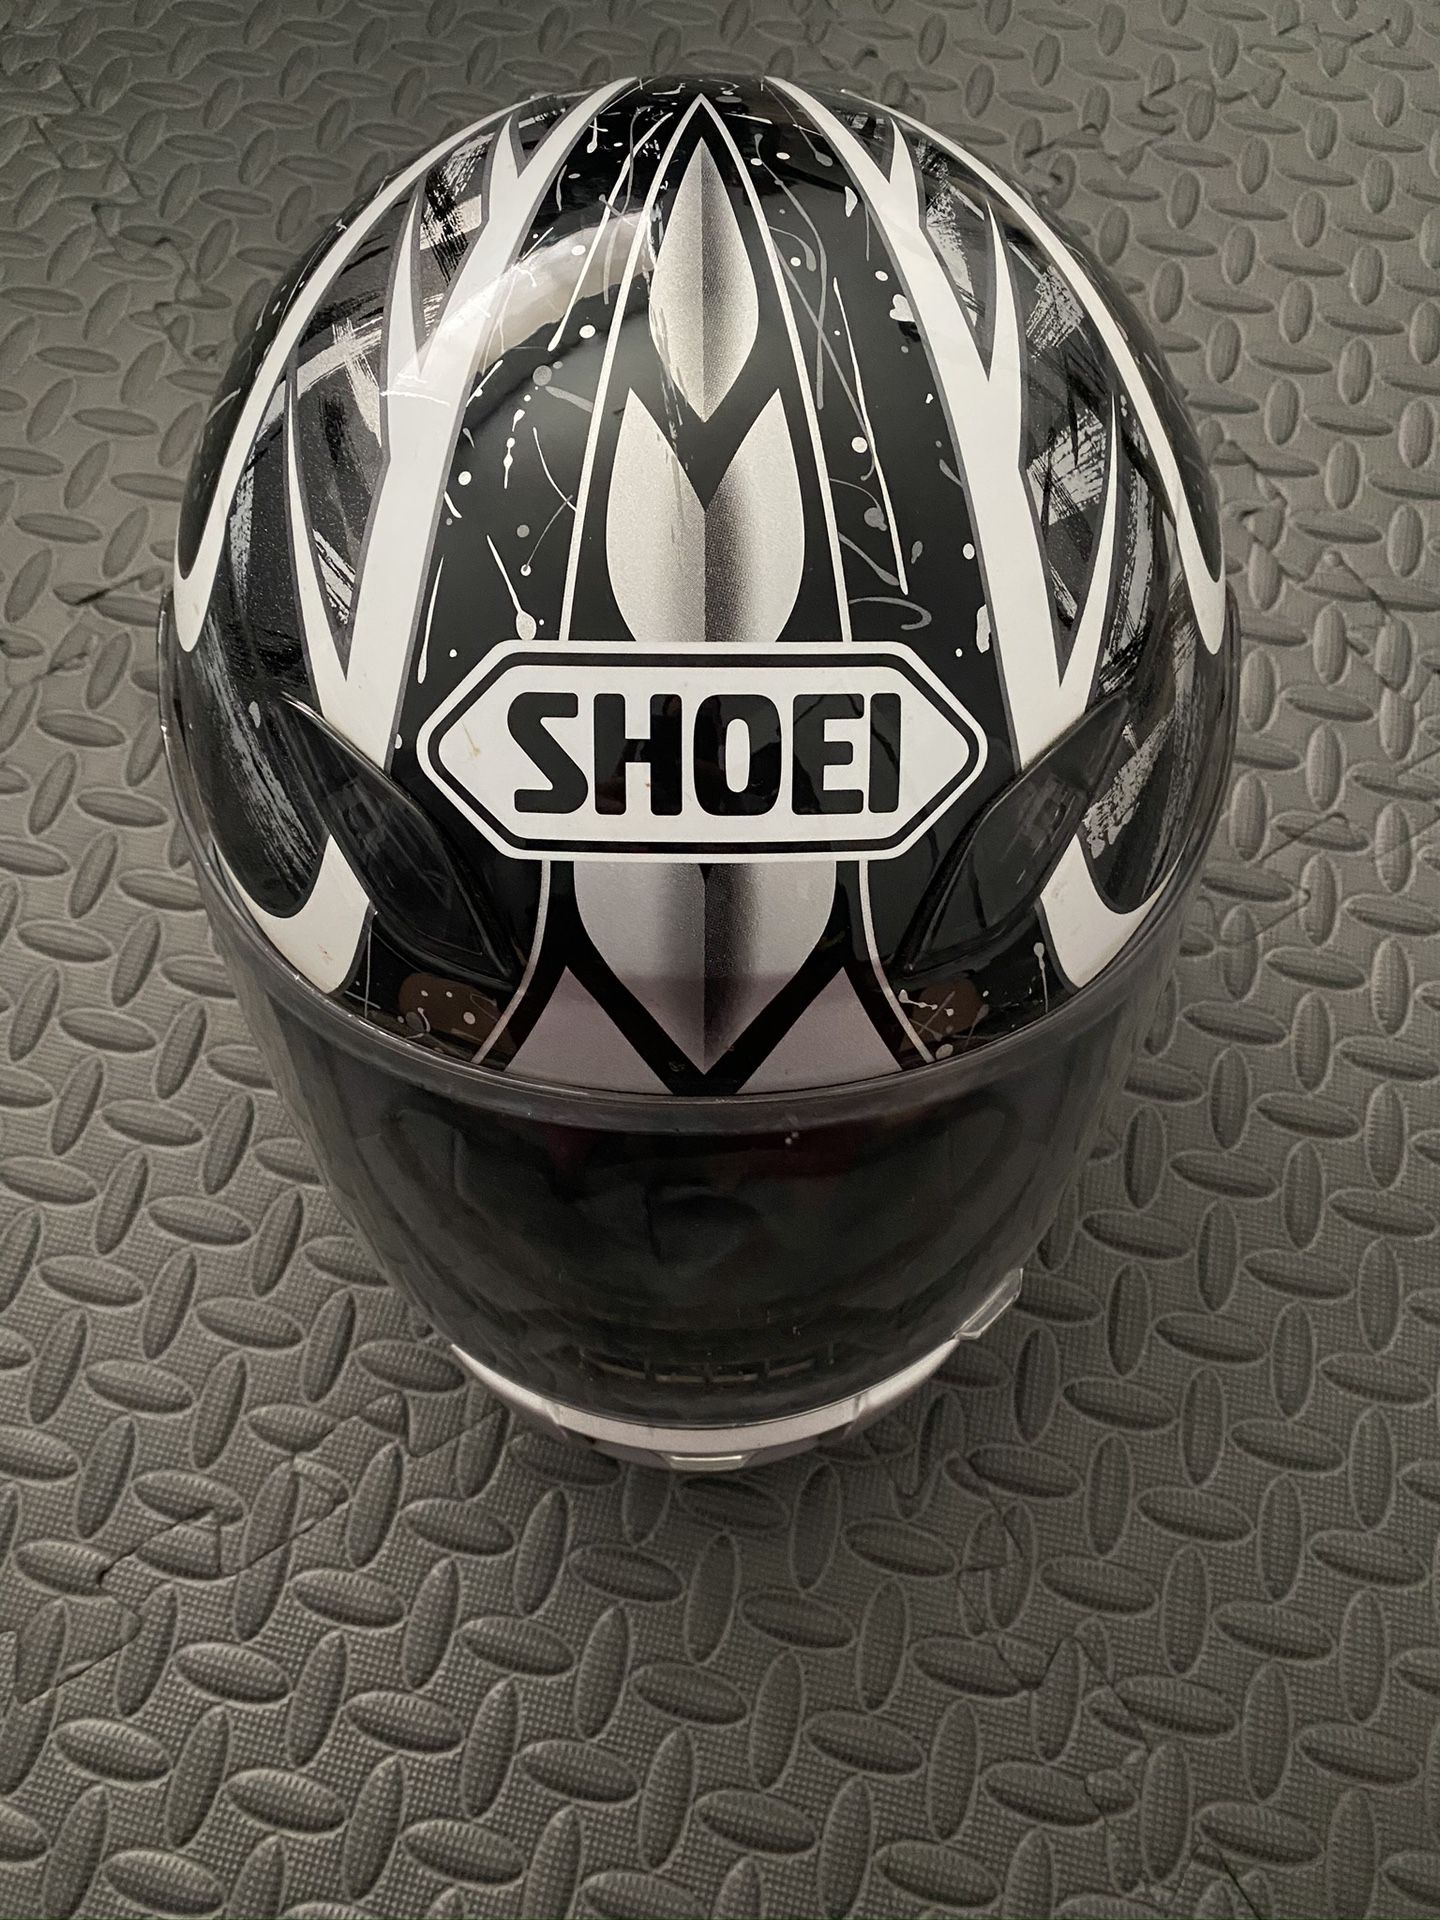 Shoei motorcycle bike helmet medium GSXR R6 Cbr Kawasaki